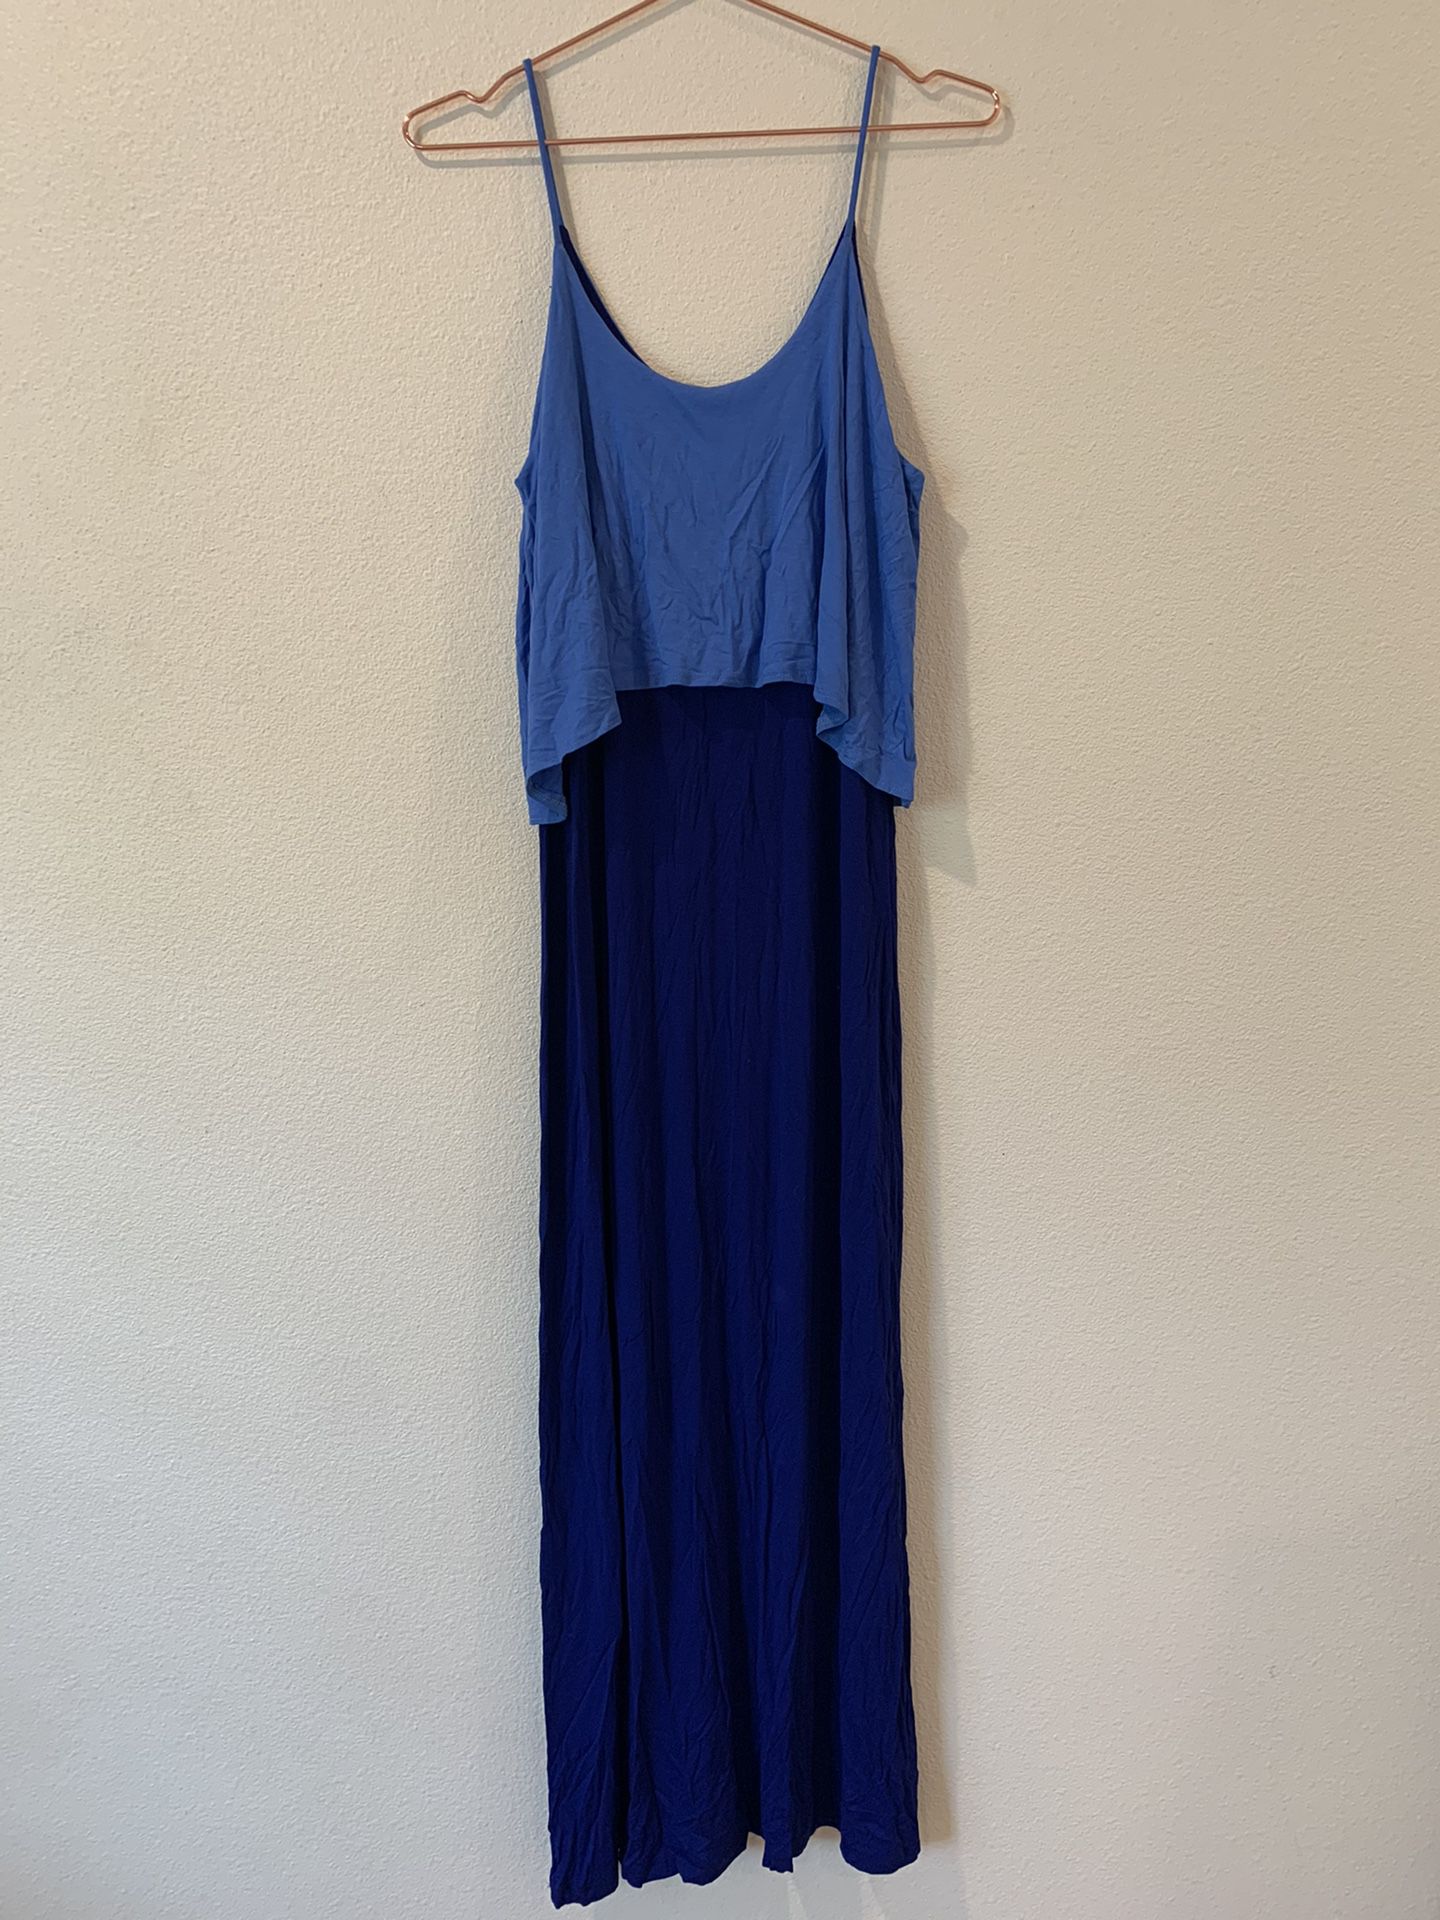 Royal Blue Maxi Dress | Size M